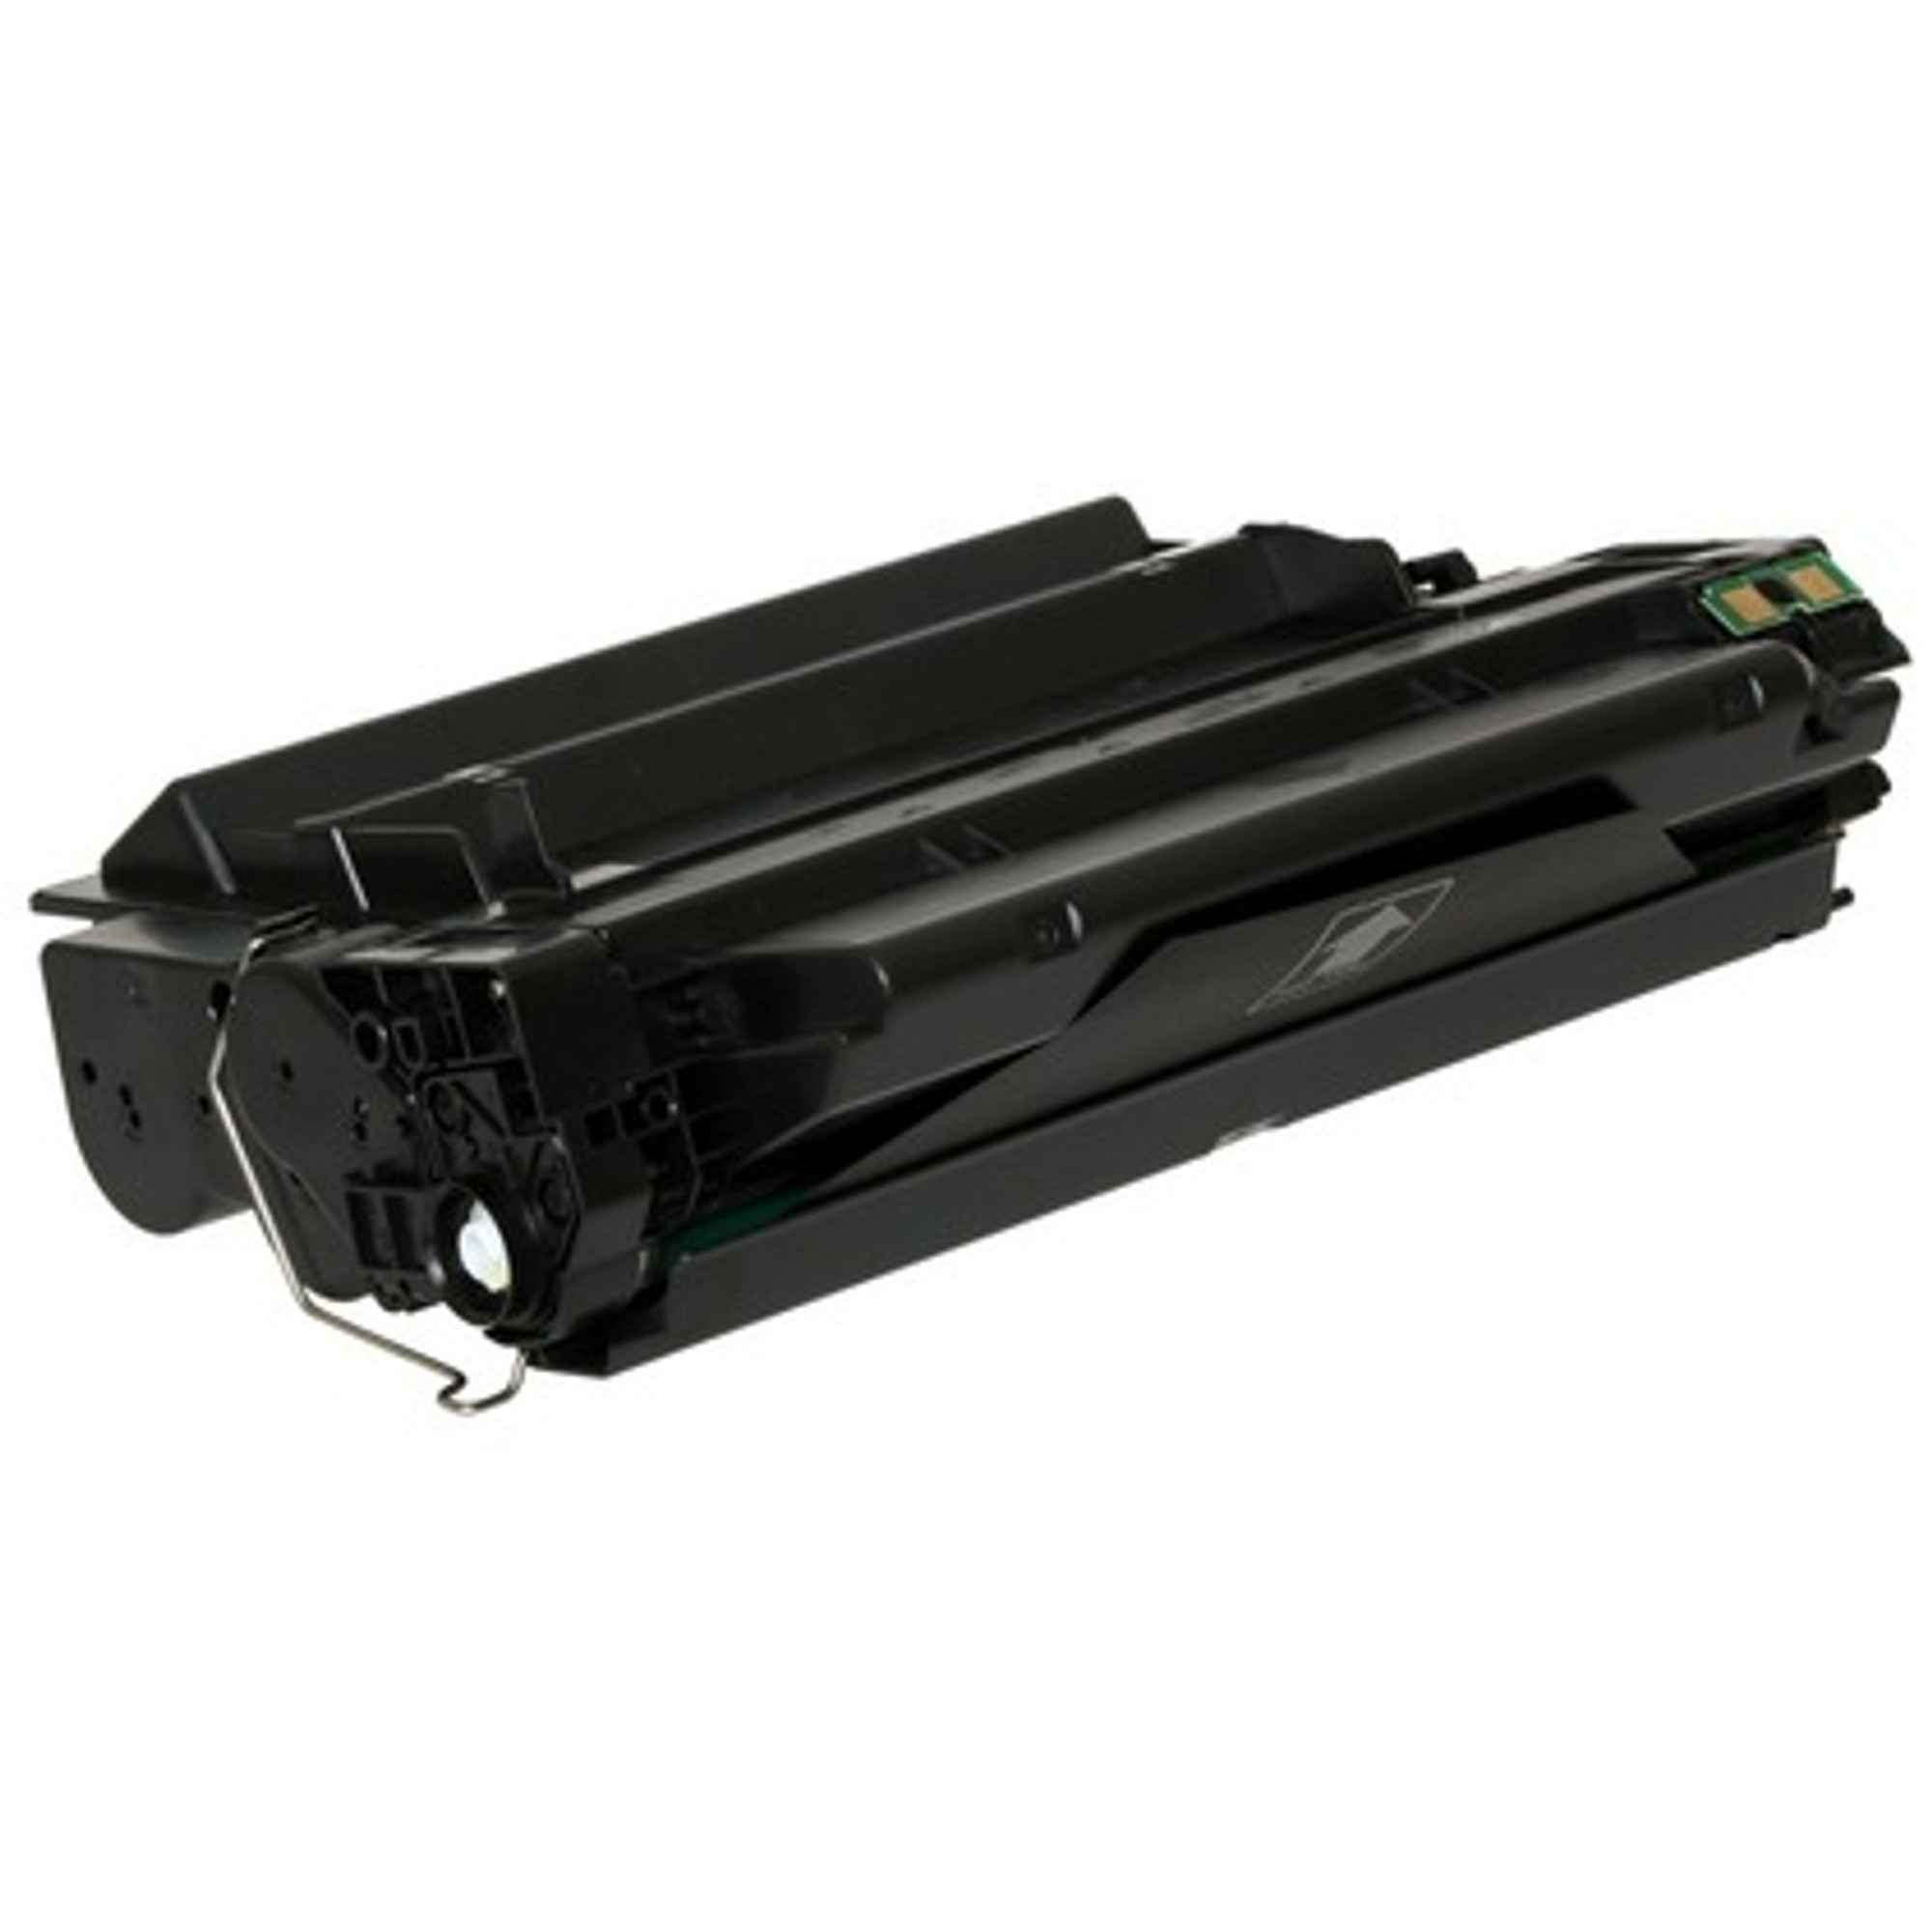 Micr Toner for HP Laserjet P3005, M3027 MFP, M3035 MFP Printer